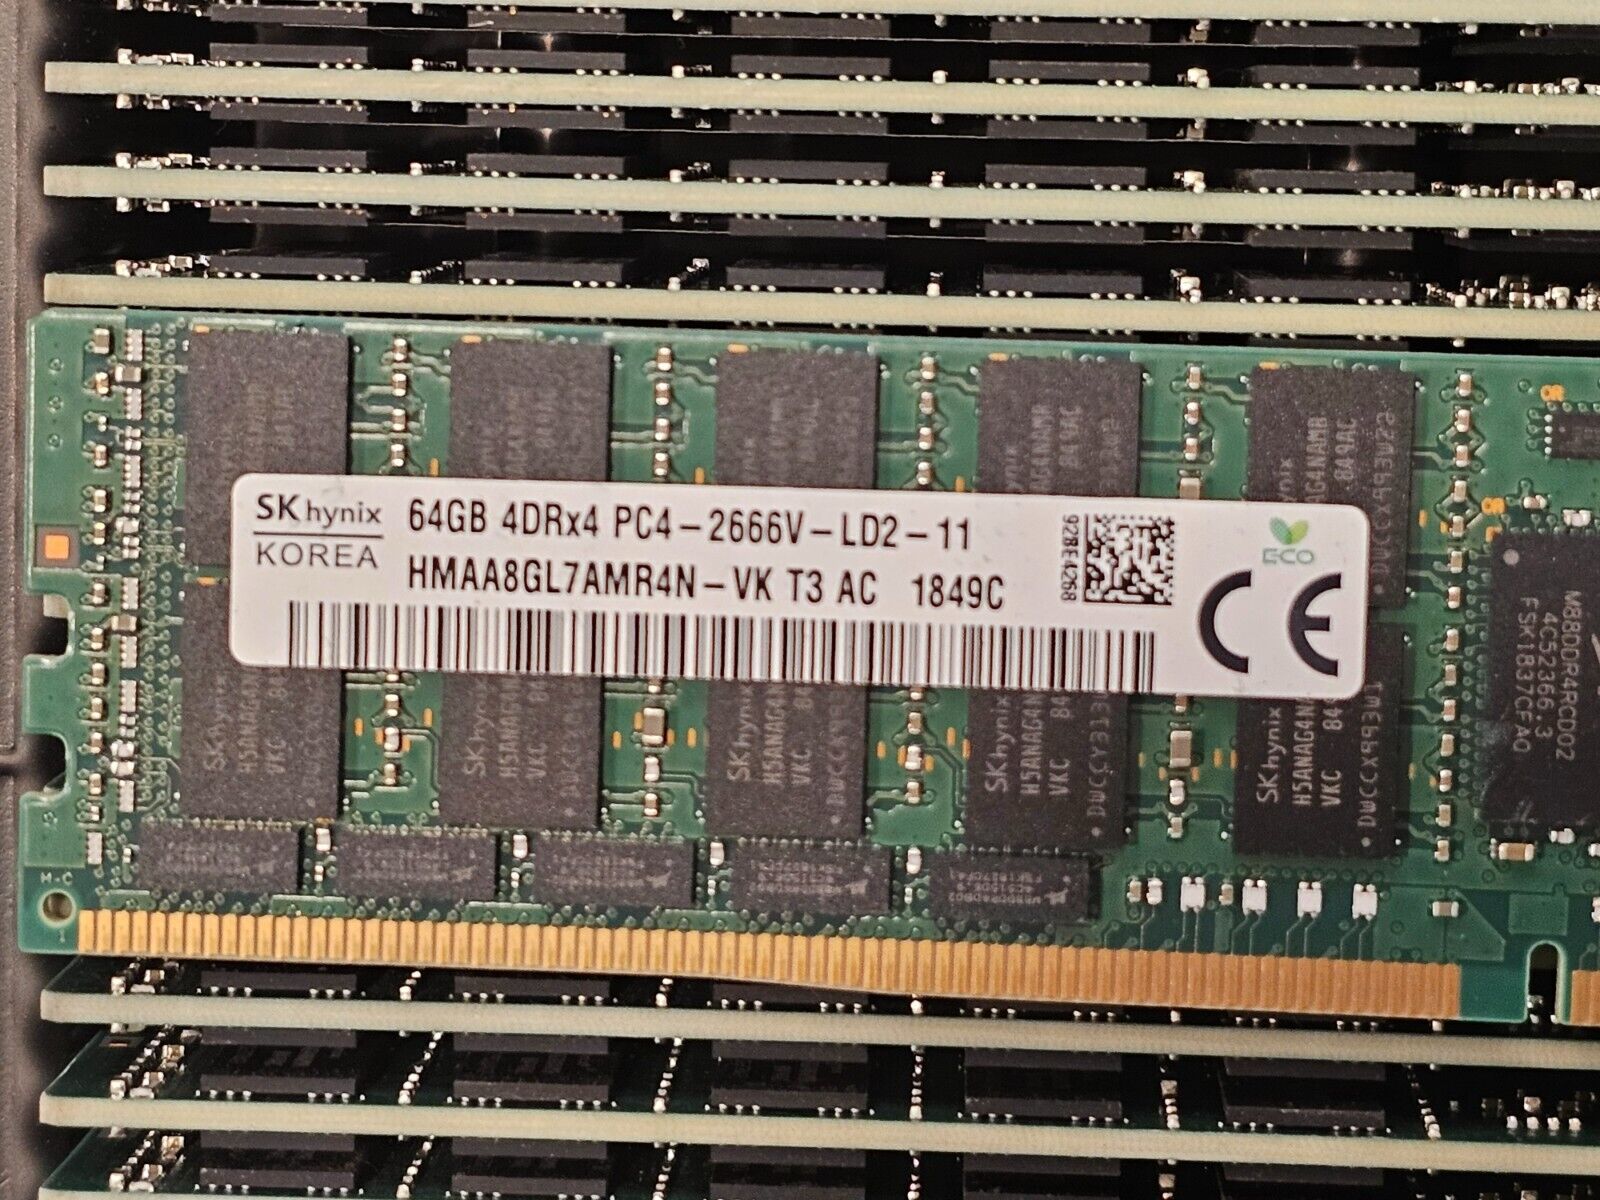 1X 64GB PC4-2666V 4DRx4 Hynix HMAA8GLAMR4N-VK ECC REG LRDIMM